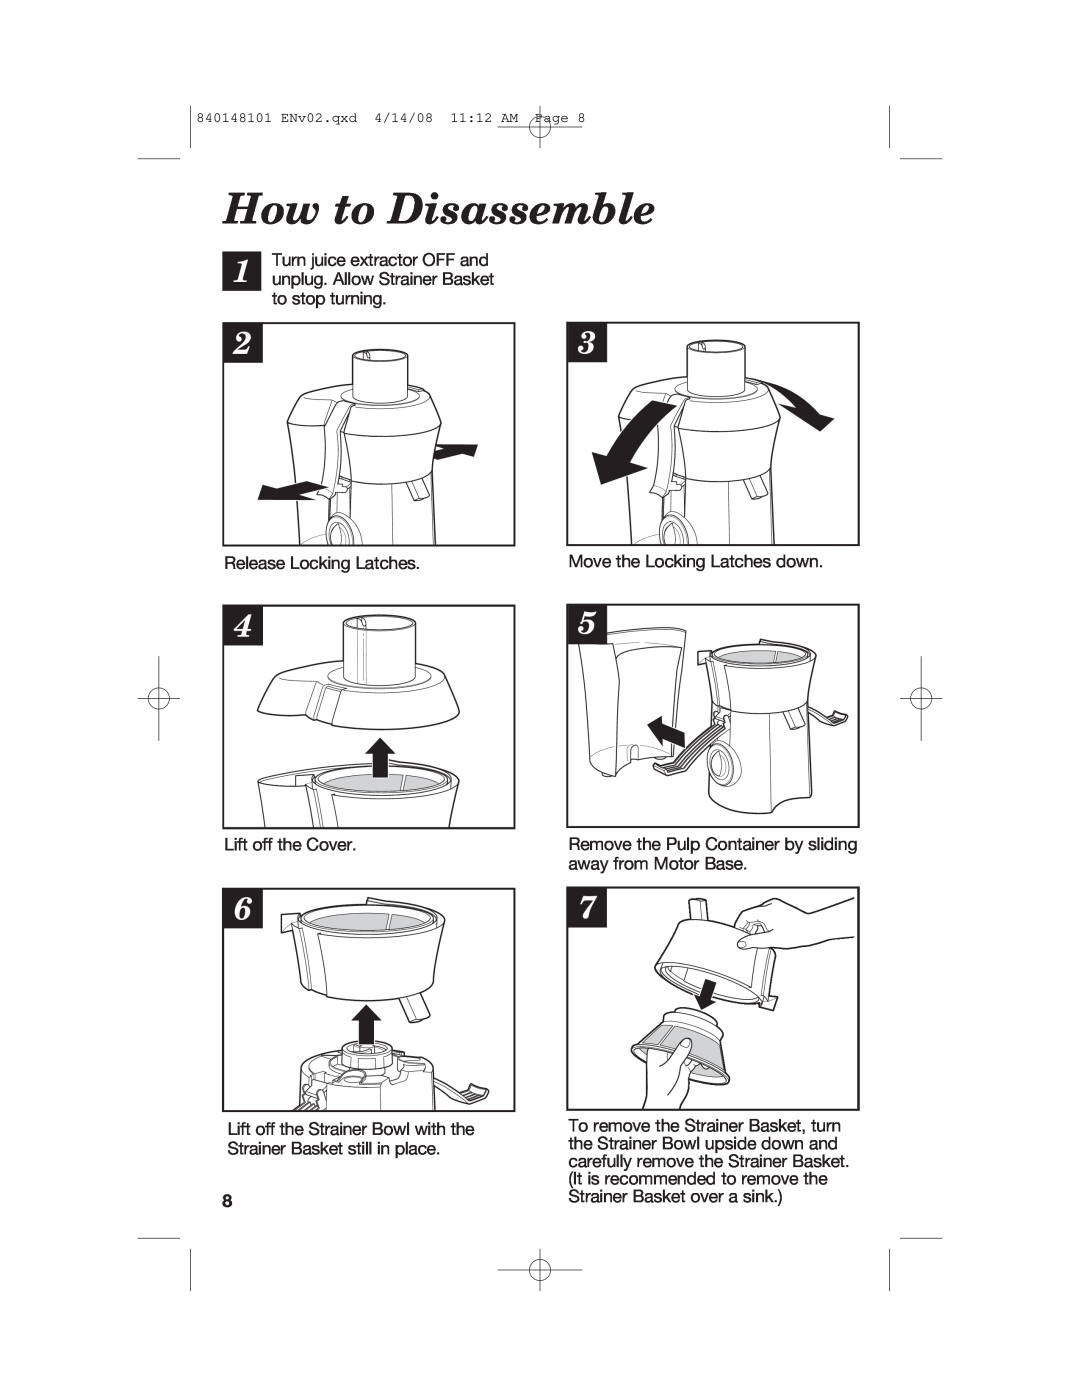 Hamilton Beach 840148101 manual How to Disassemble 